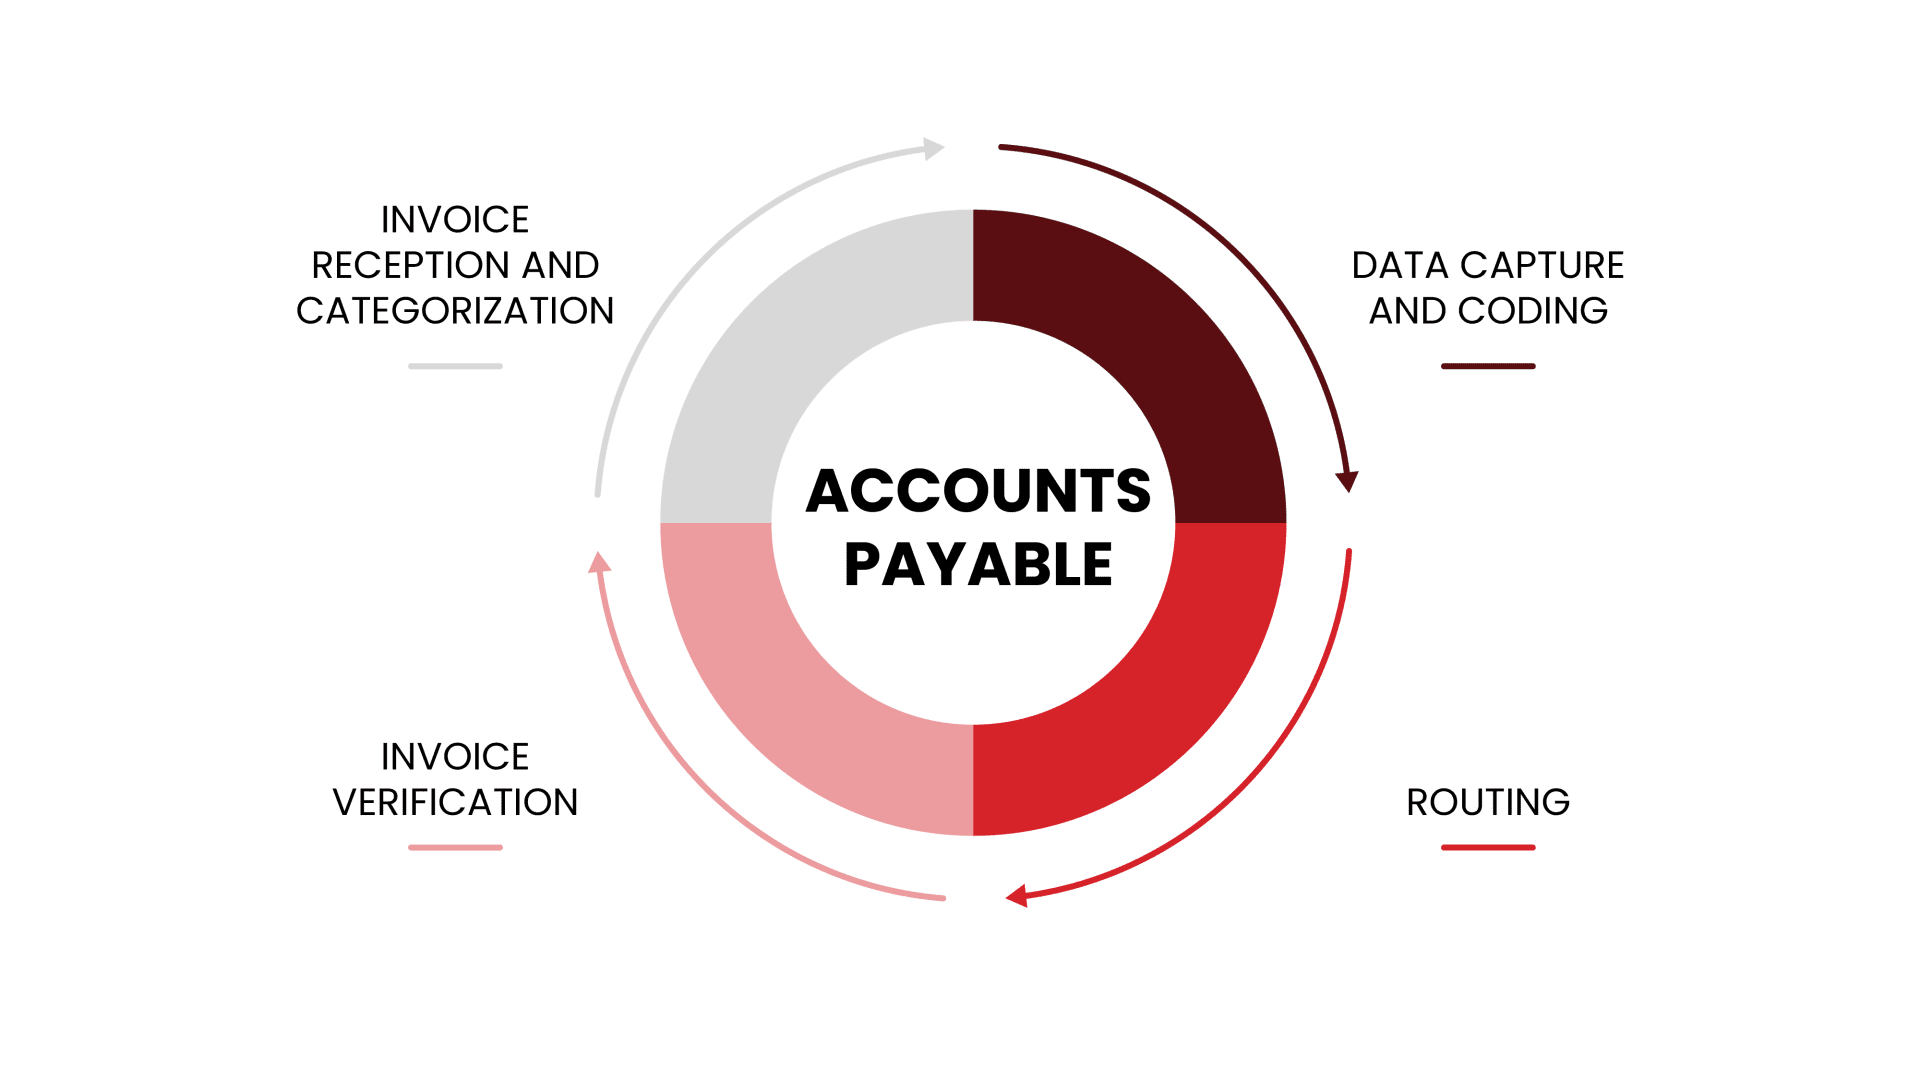 Accounts Payable functions